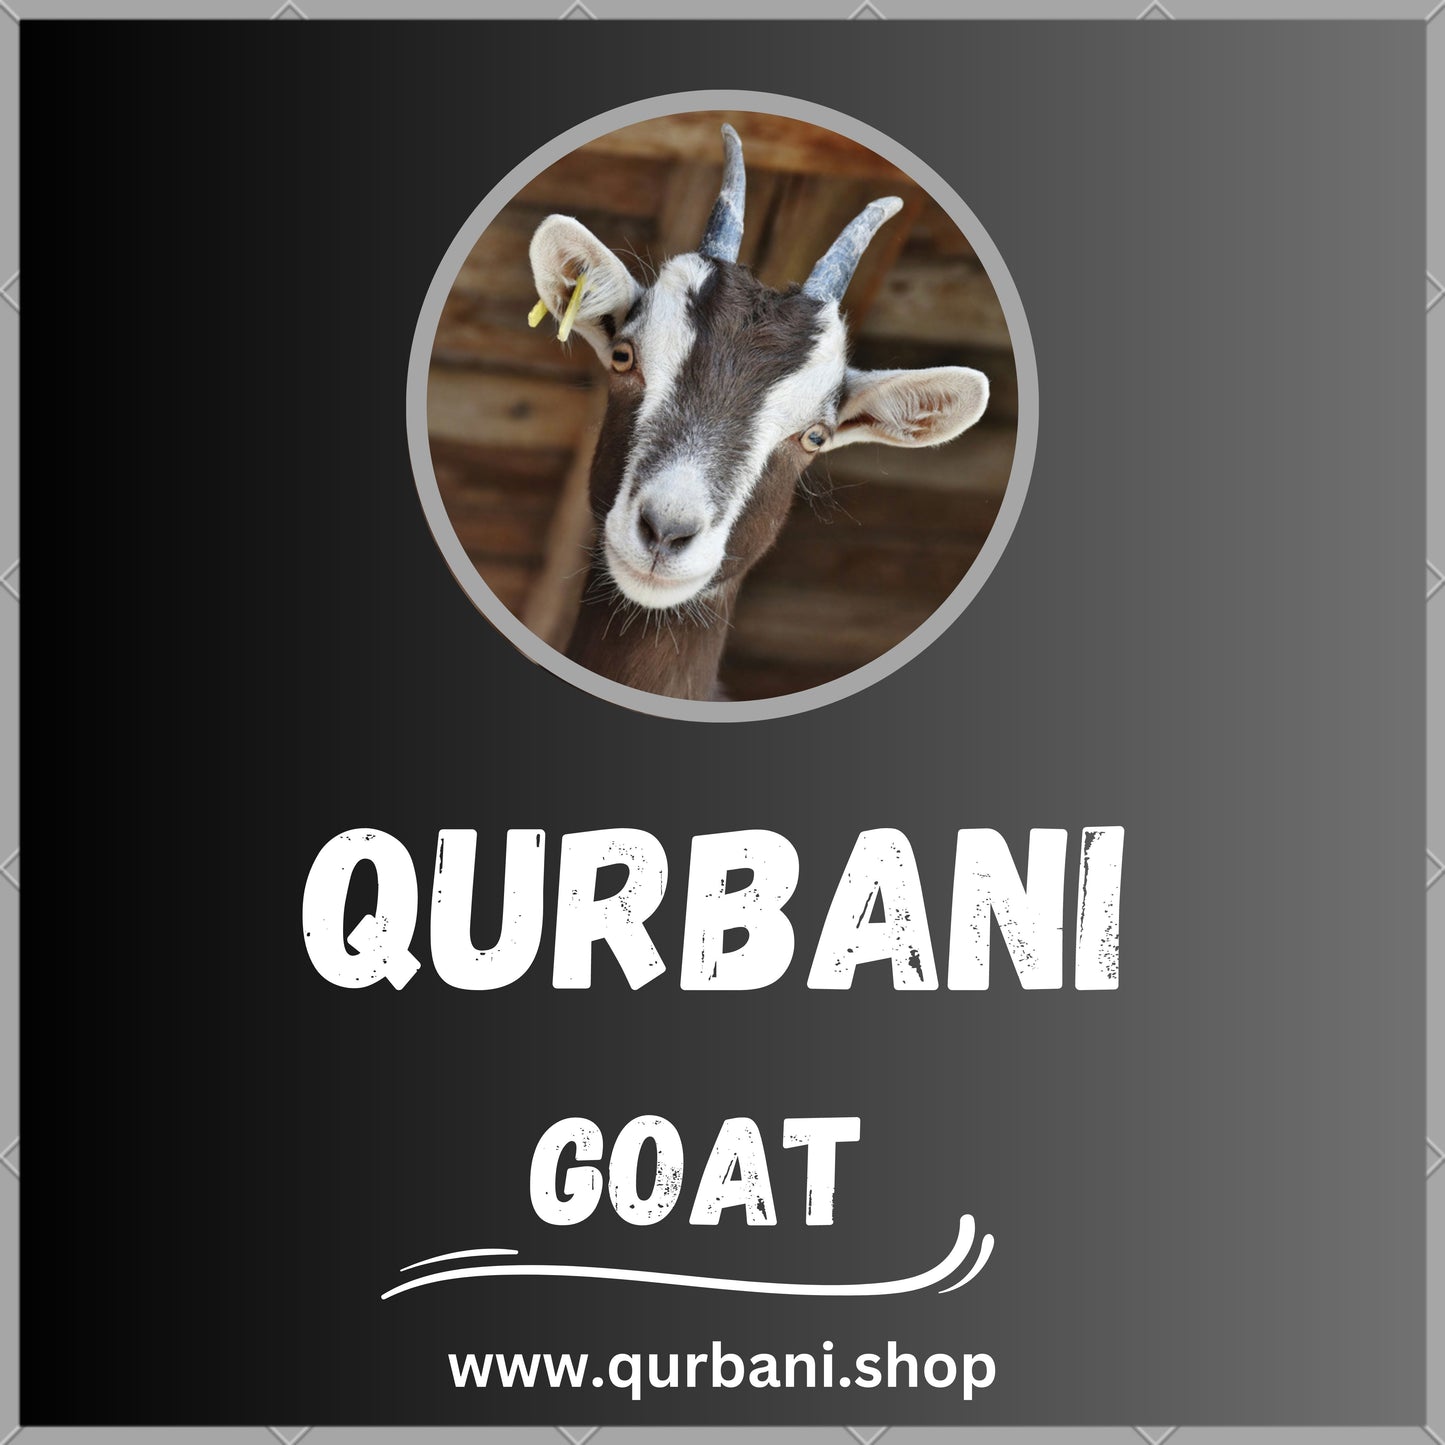 Perform Qurbani in Allentown - Book Your Eid Sacrifice